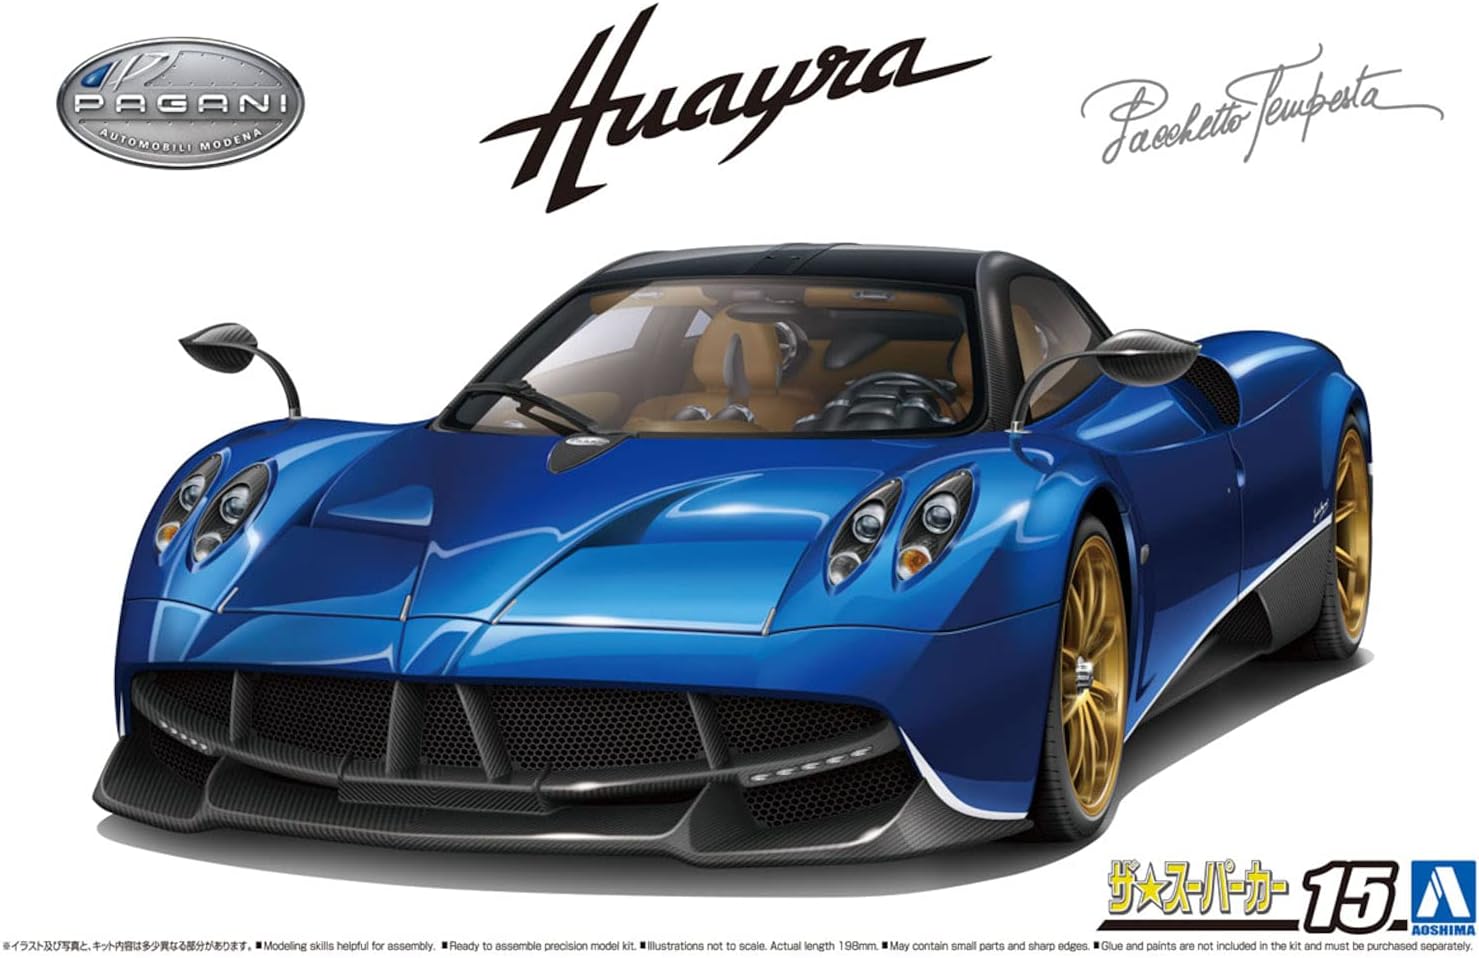 Aoshima Bunka Kyozai 1/24 The Super Car Series No.15 2016 Pagani Huayra Pachet Tempest - BanzaiHobby